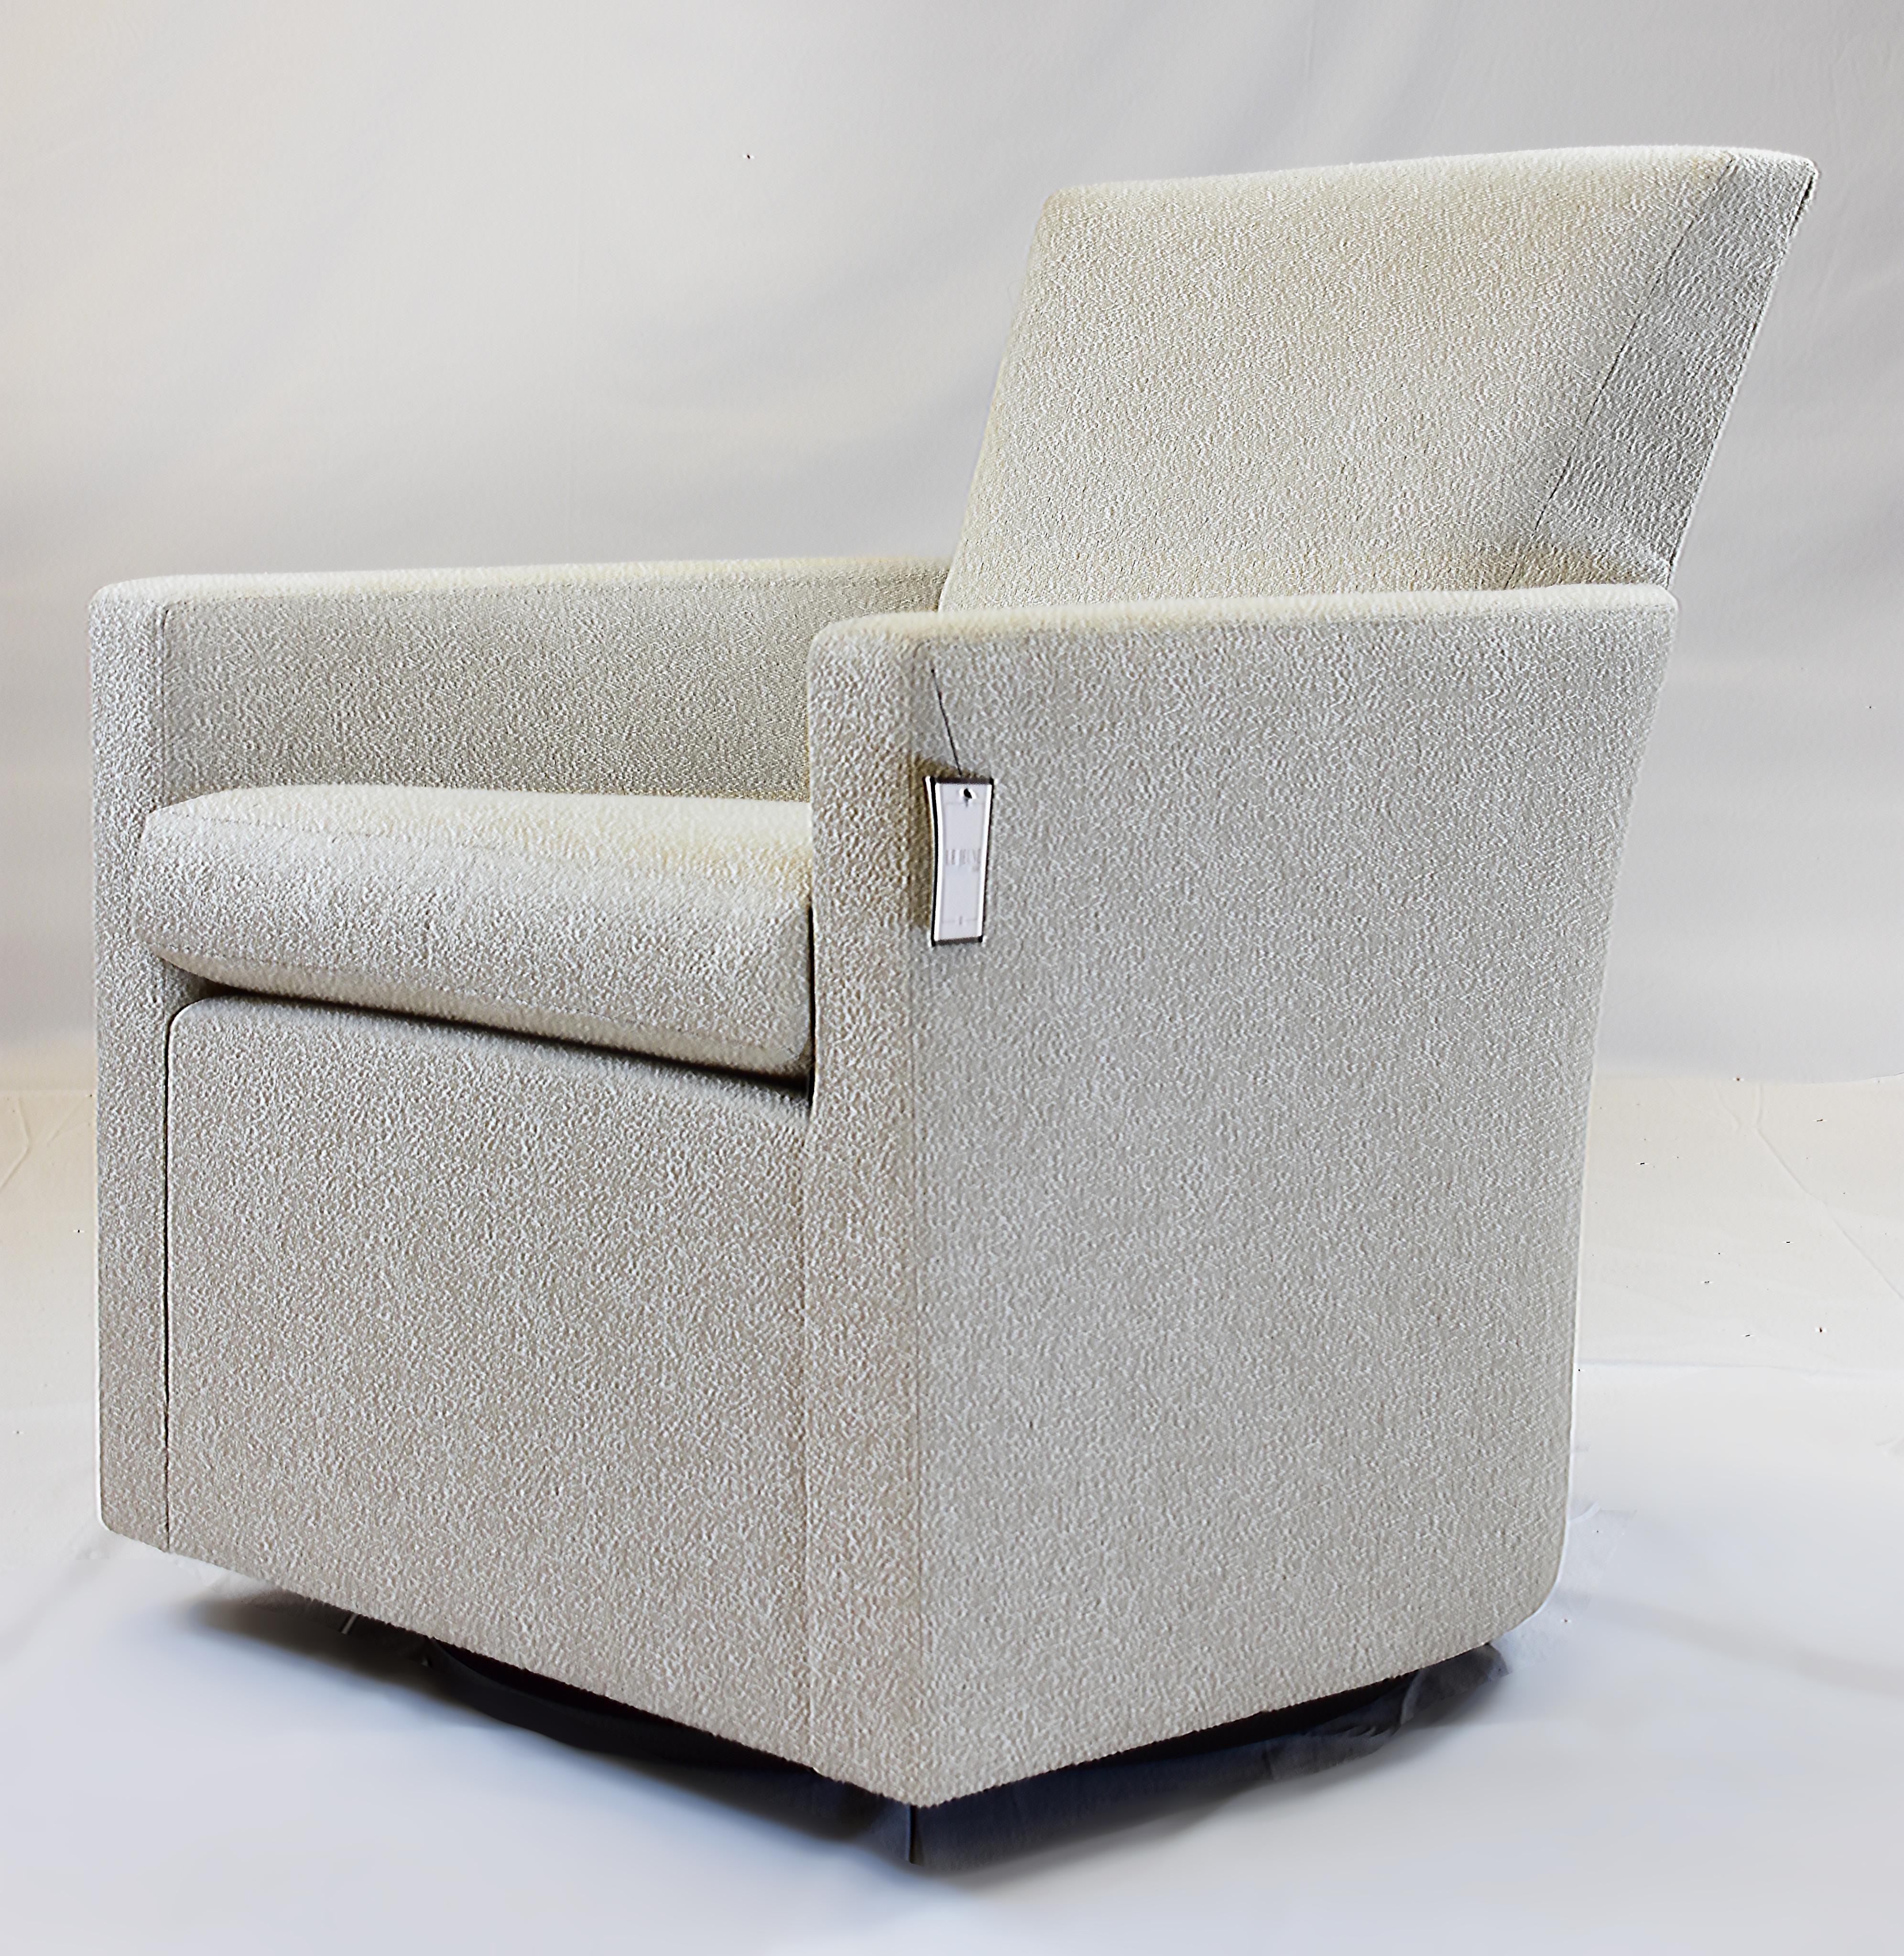 Le Jeune Upholstery Barrel Swivel Kara Chair Showroom Model, 2 Available For Sale 2